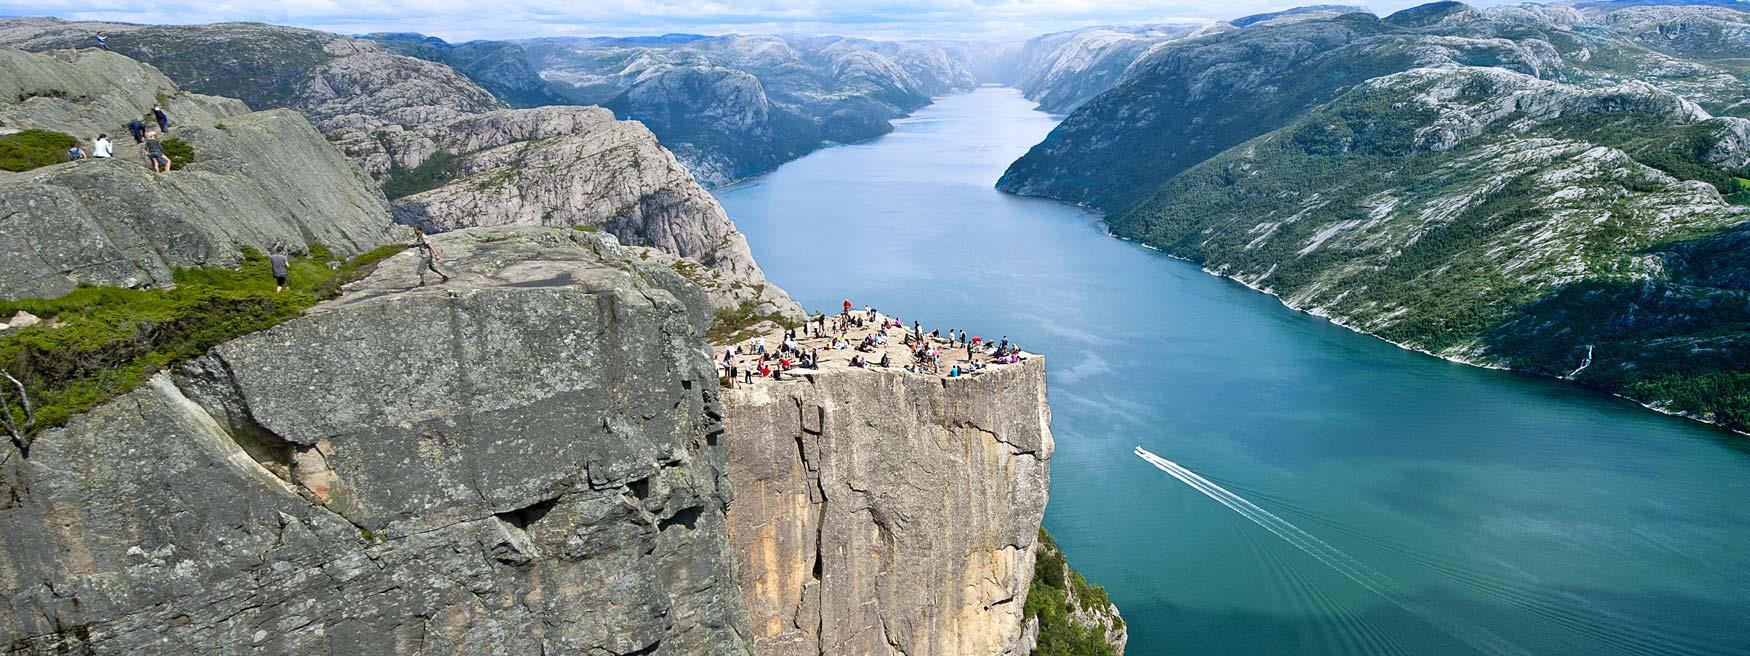 Pulpit rock Norway.jpg